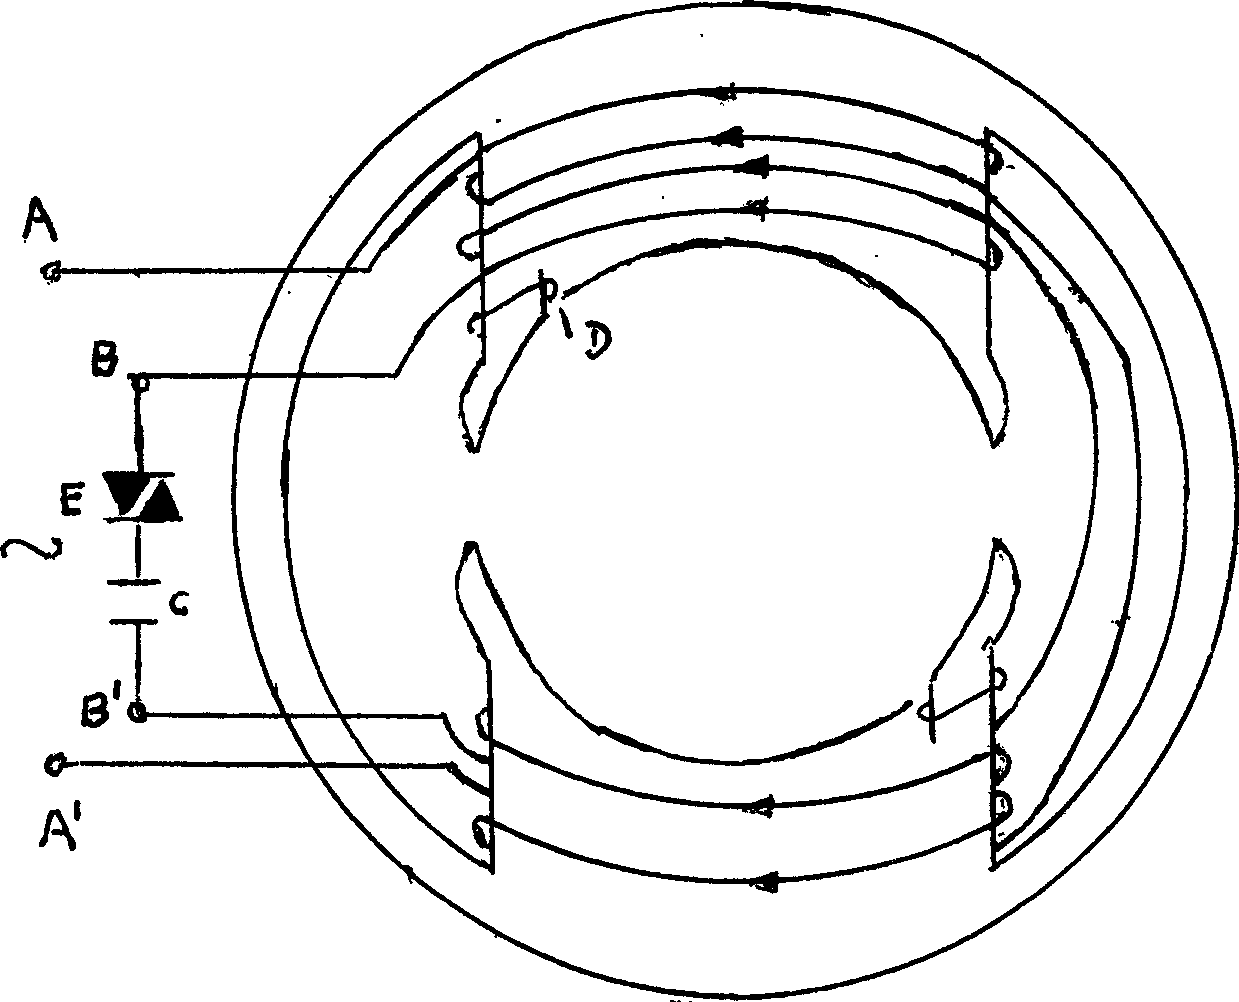 Single-phase transformer asynchronous motor